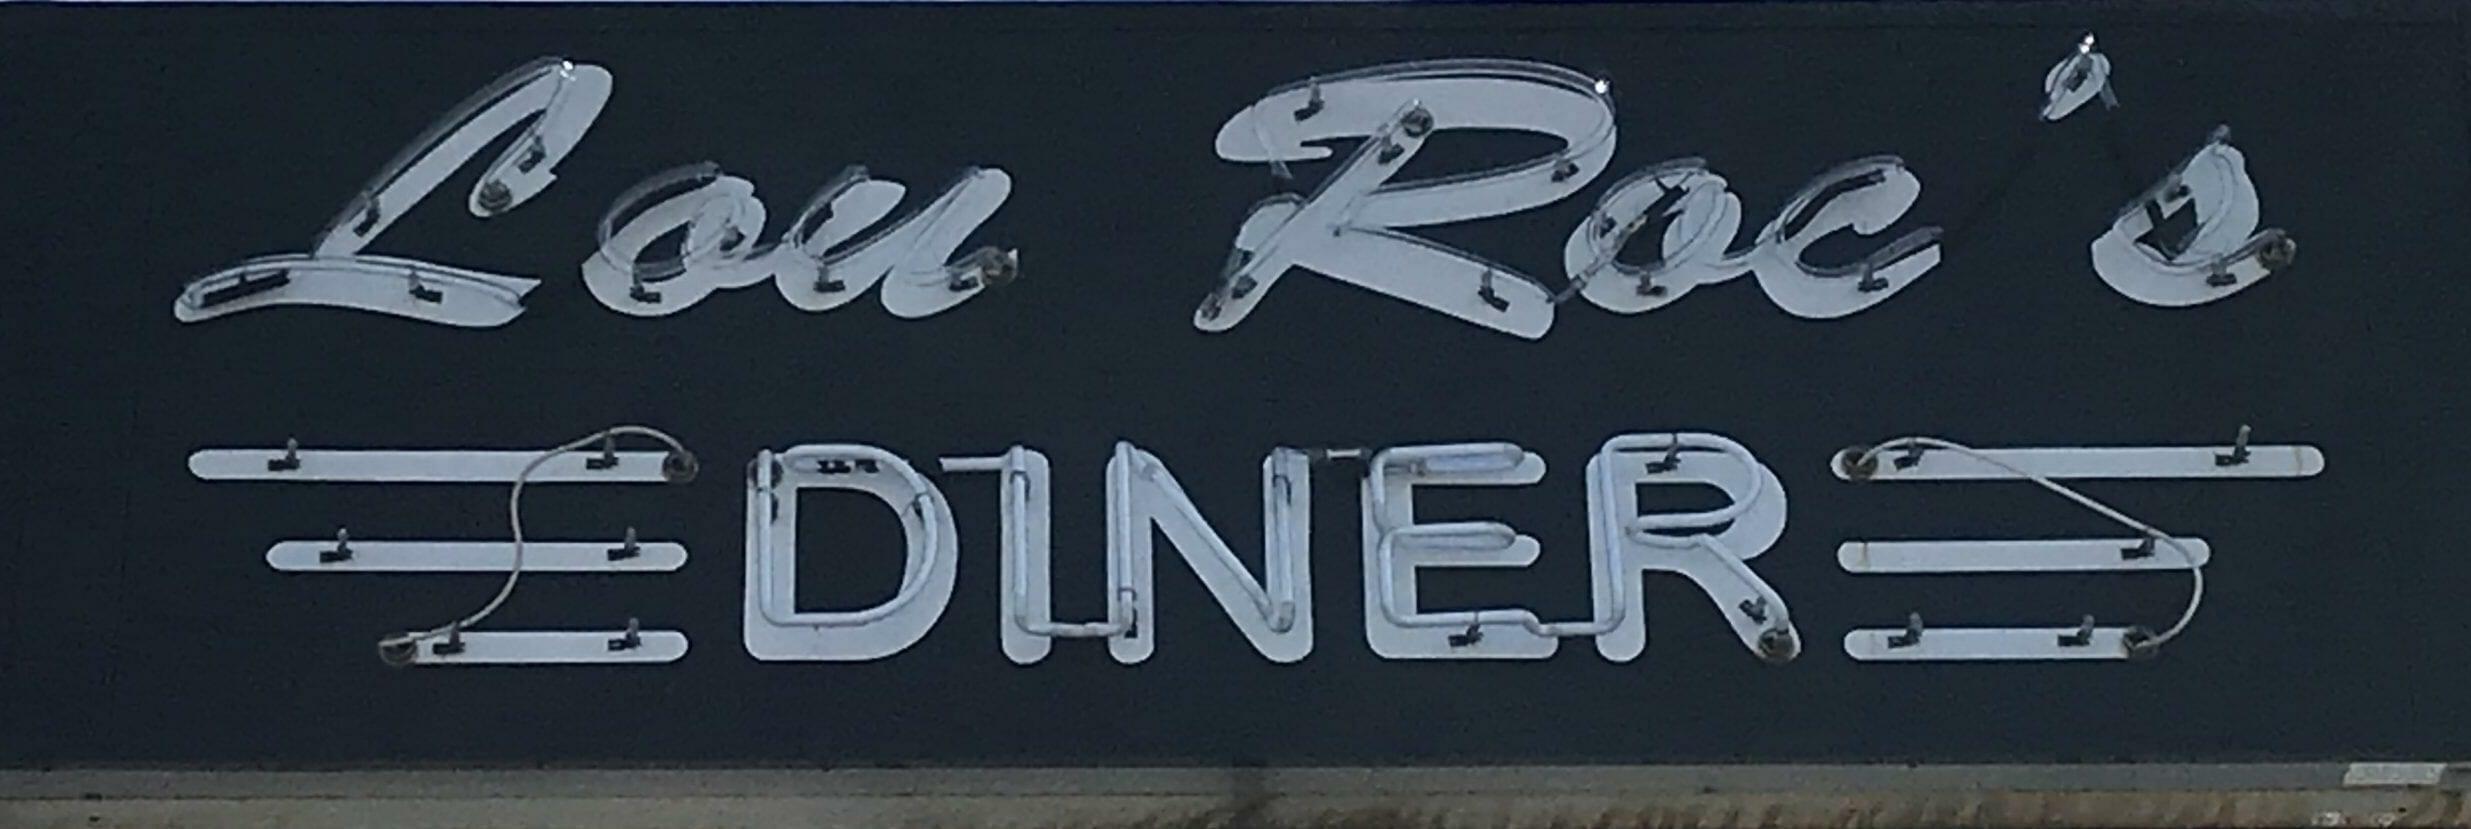 Lou Roc's Diner